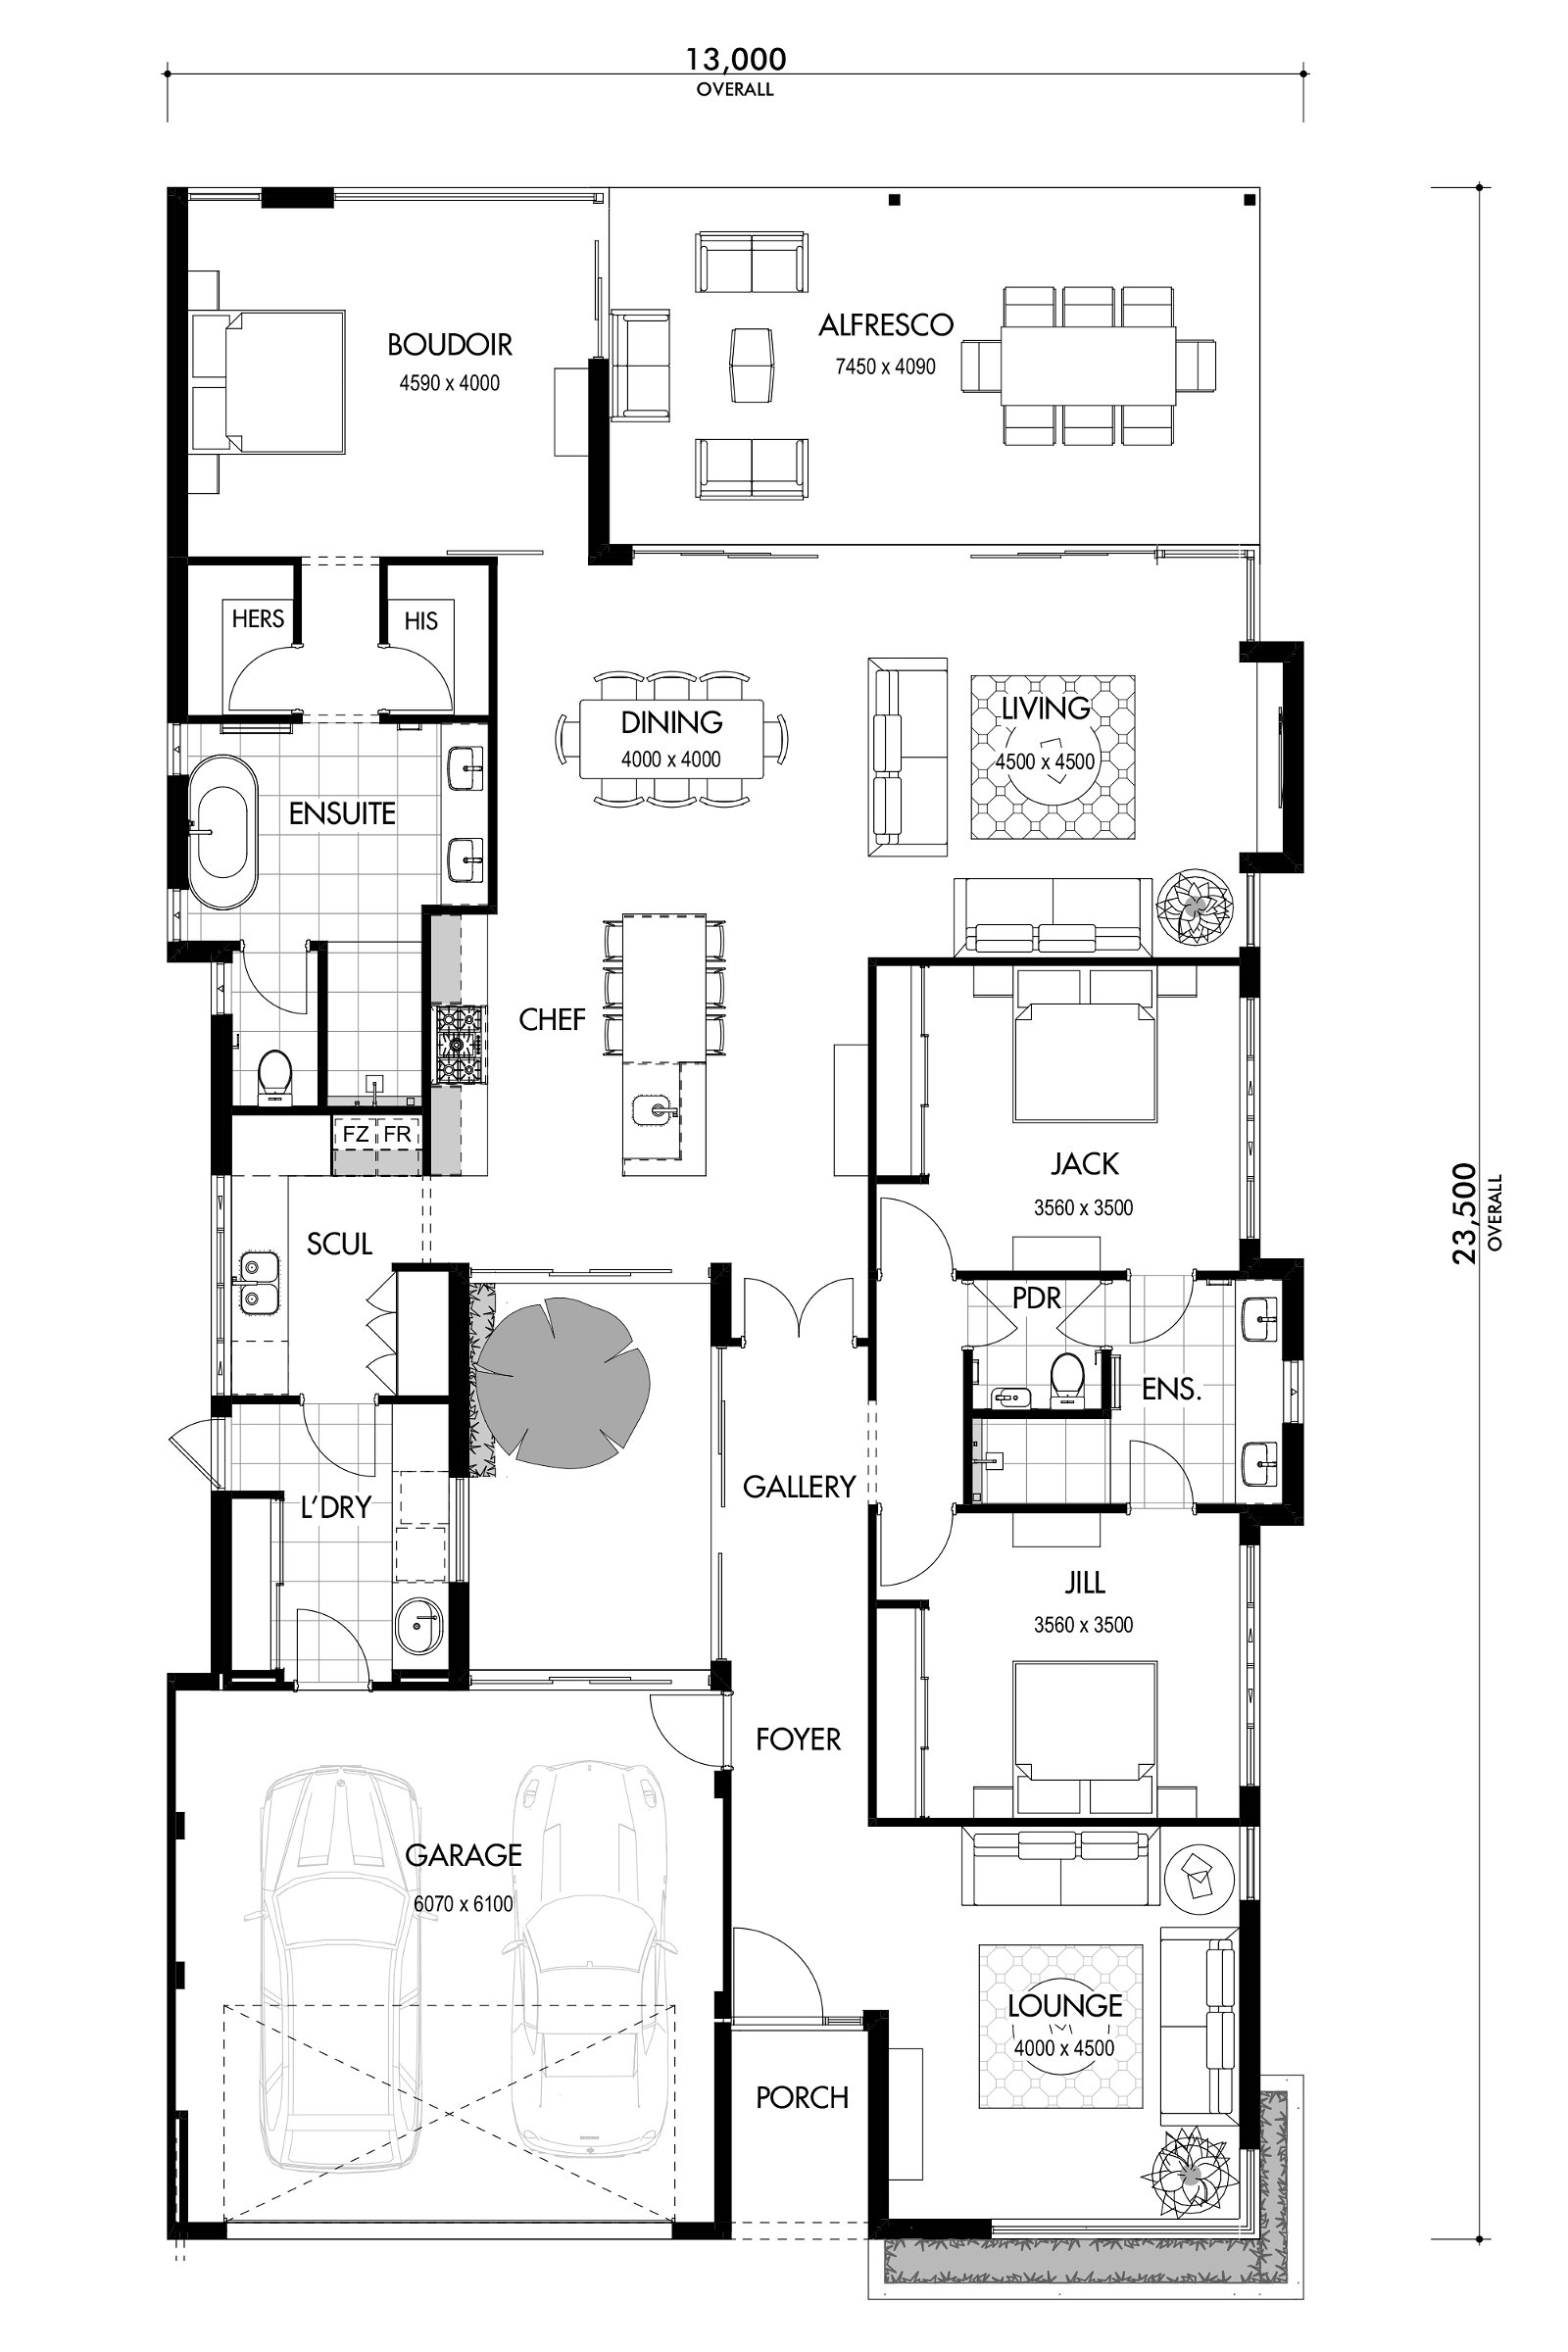 Residential Attitudes - Santa Monica - Floorplan - Santa Monica Floorplan Website